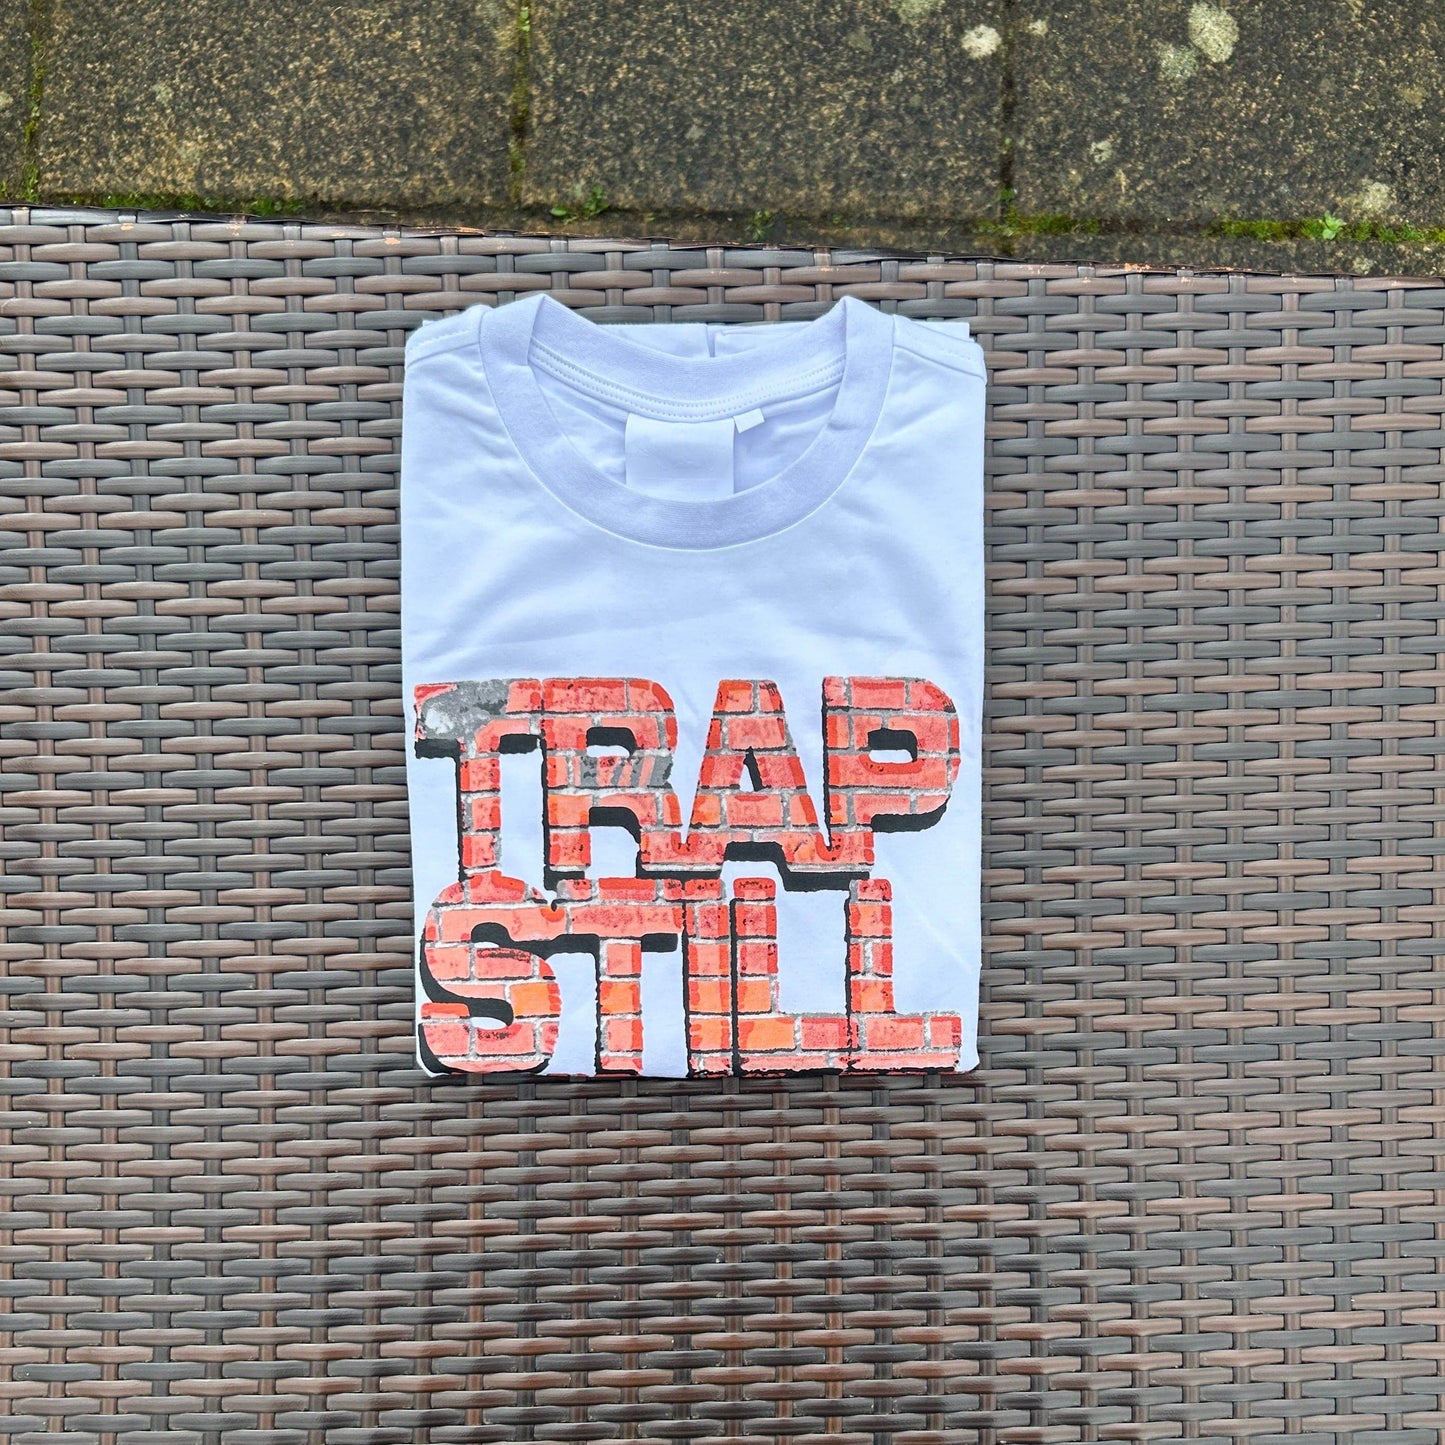 Syna World "Trap Still Runnin" T Shirt